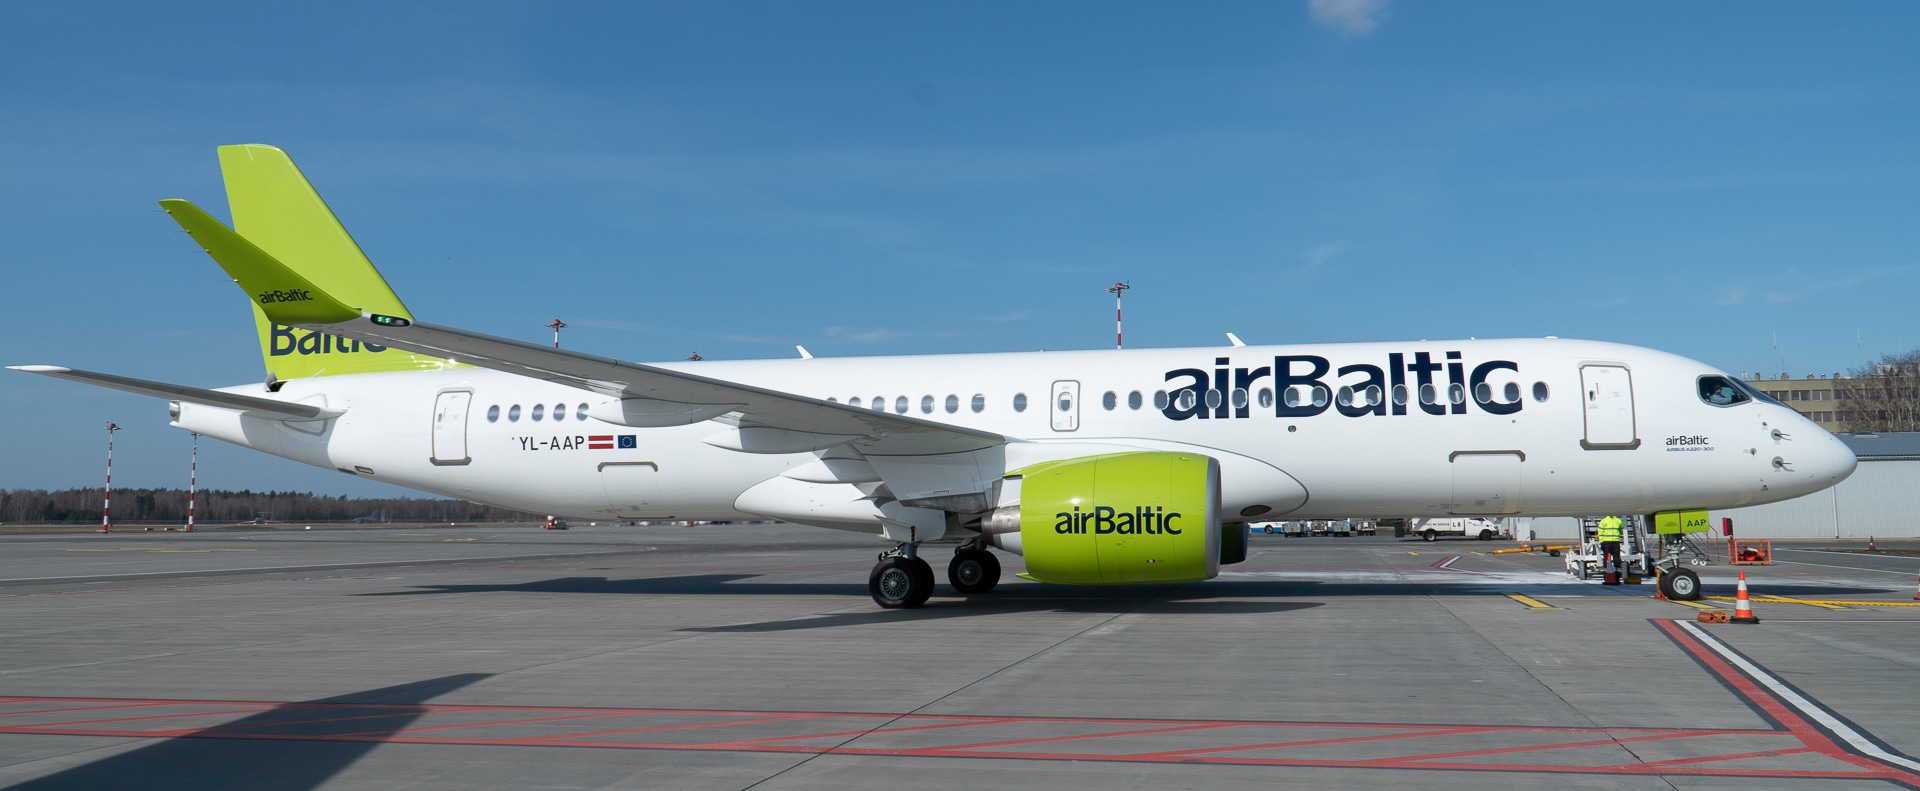 airBaltic to extend summer routes of Catania, Malta, Porto, Valencia into winter season